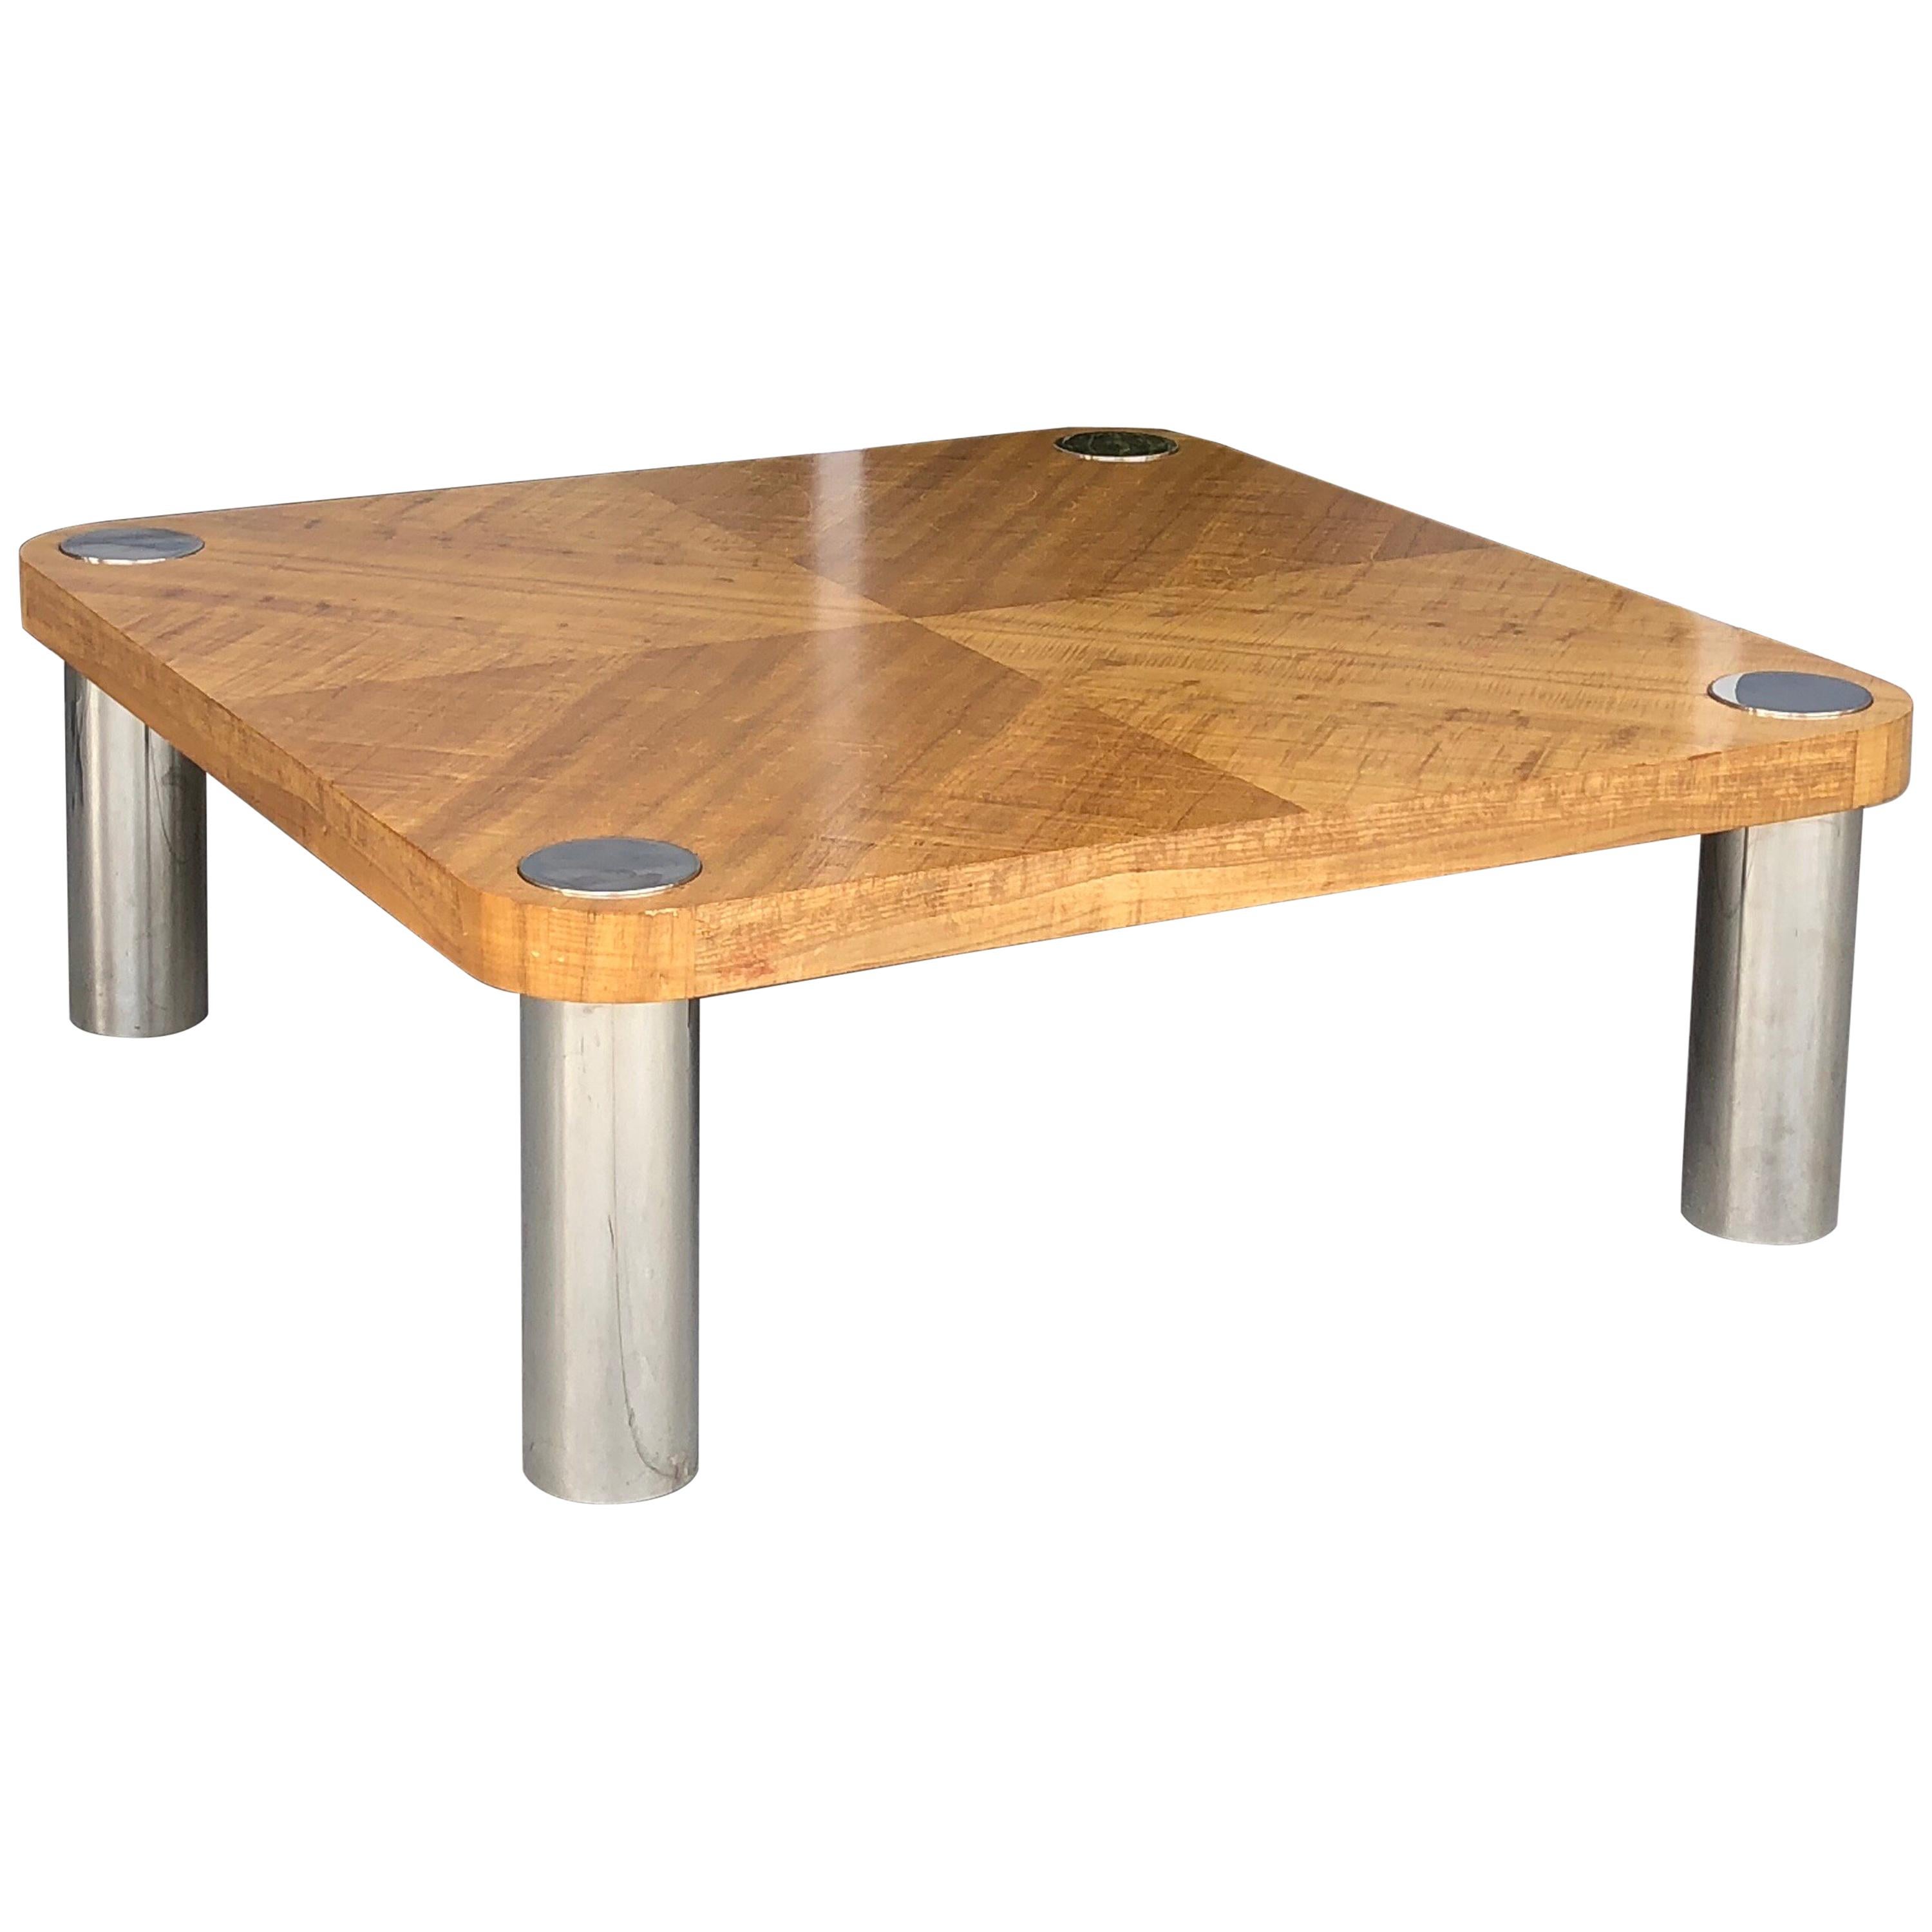 Vladimir Kagan Stainless Steel and Wood Coffee Table